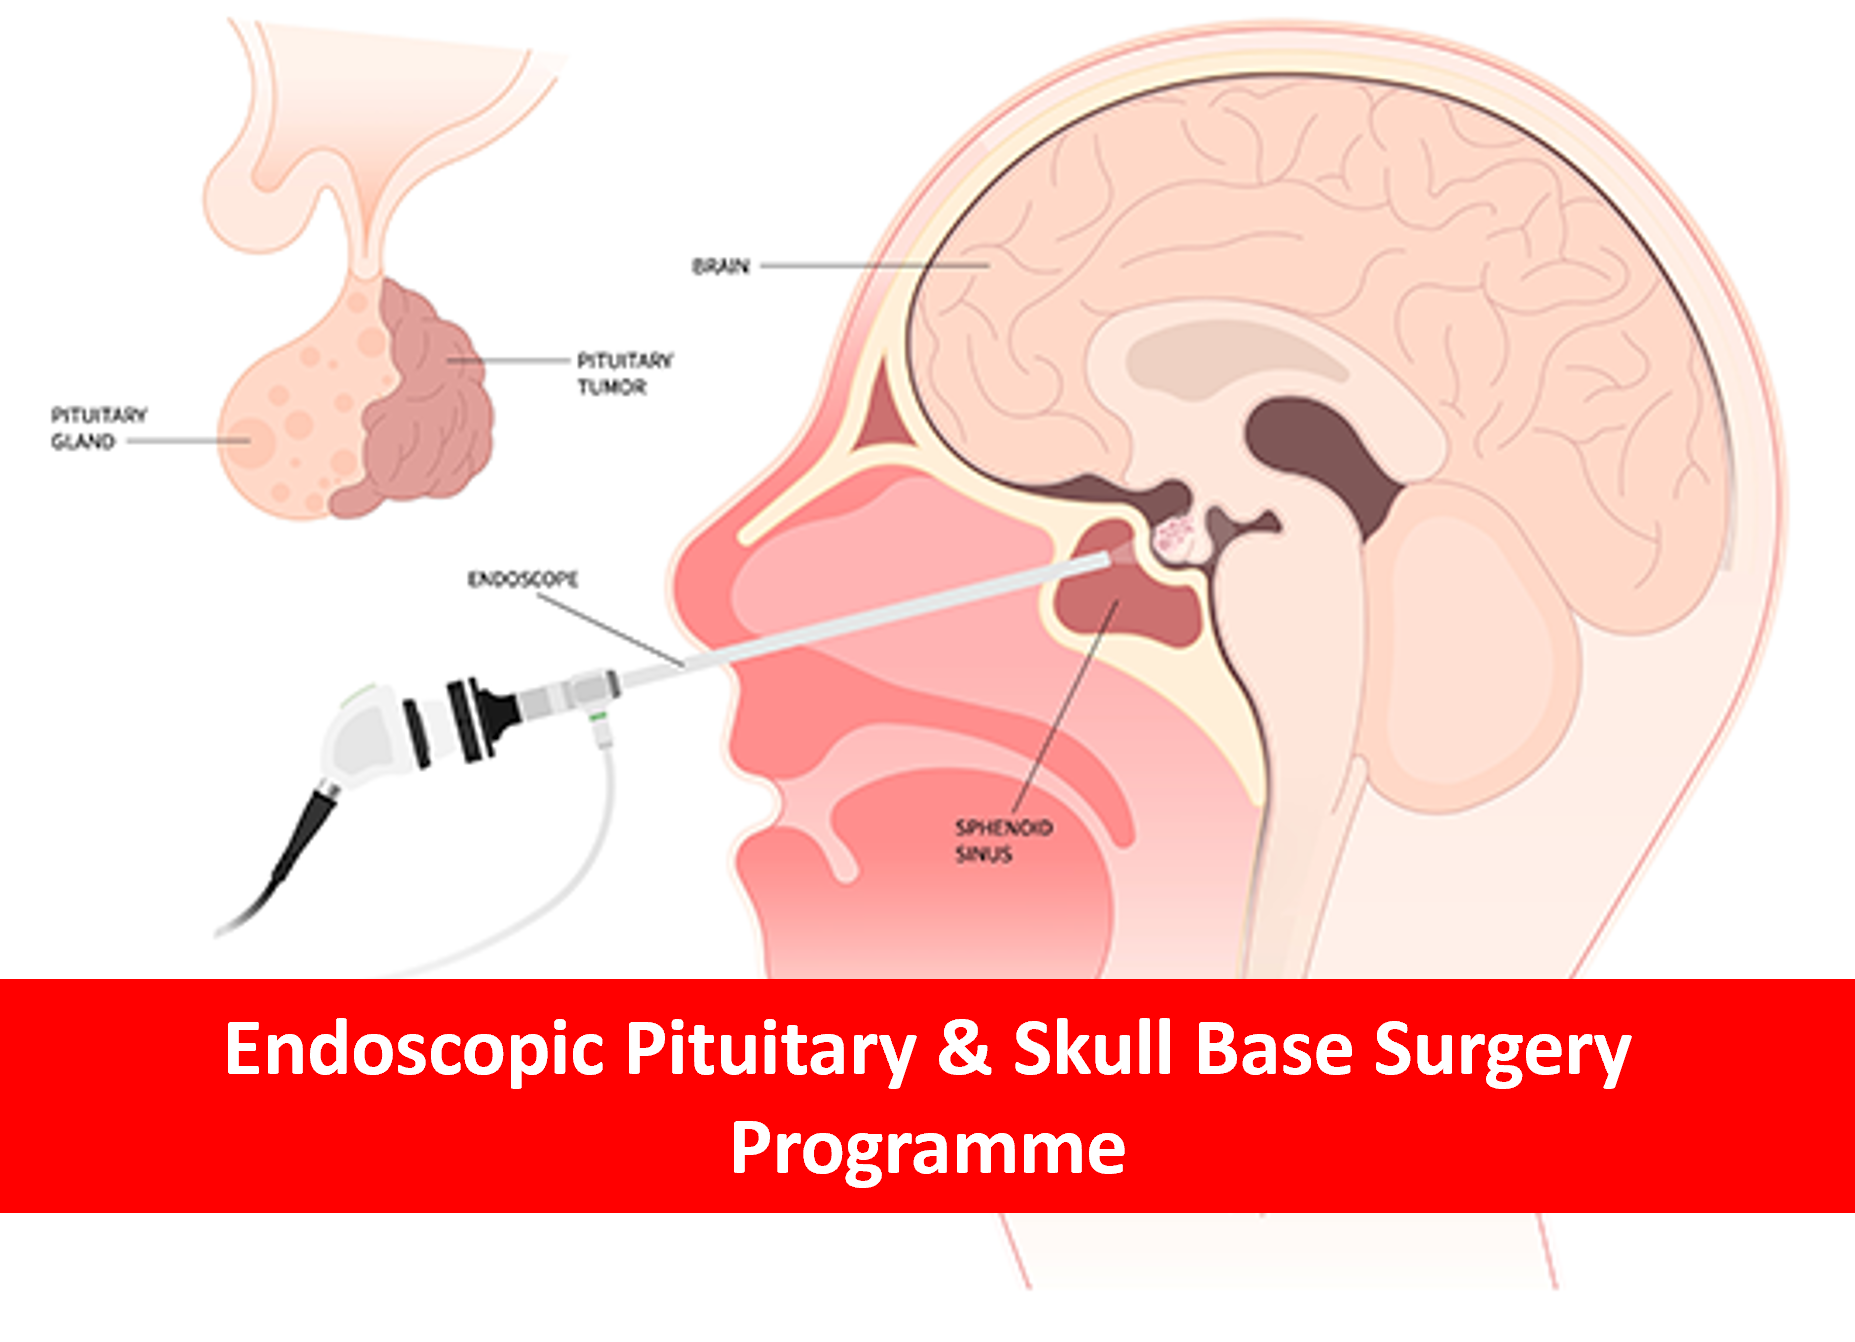 Endoscopy Pituitary